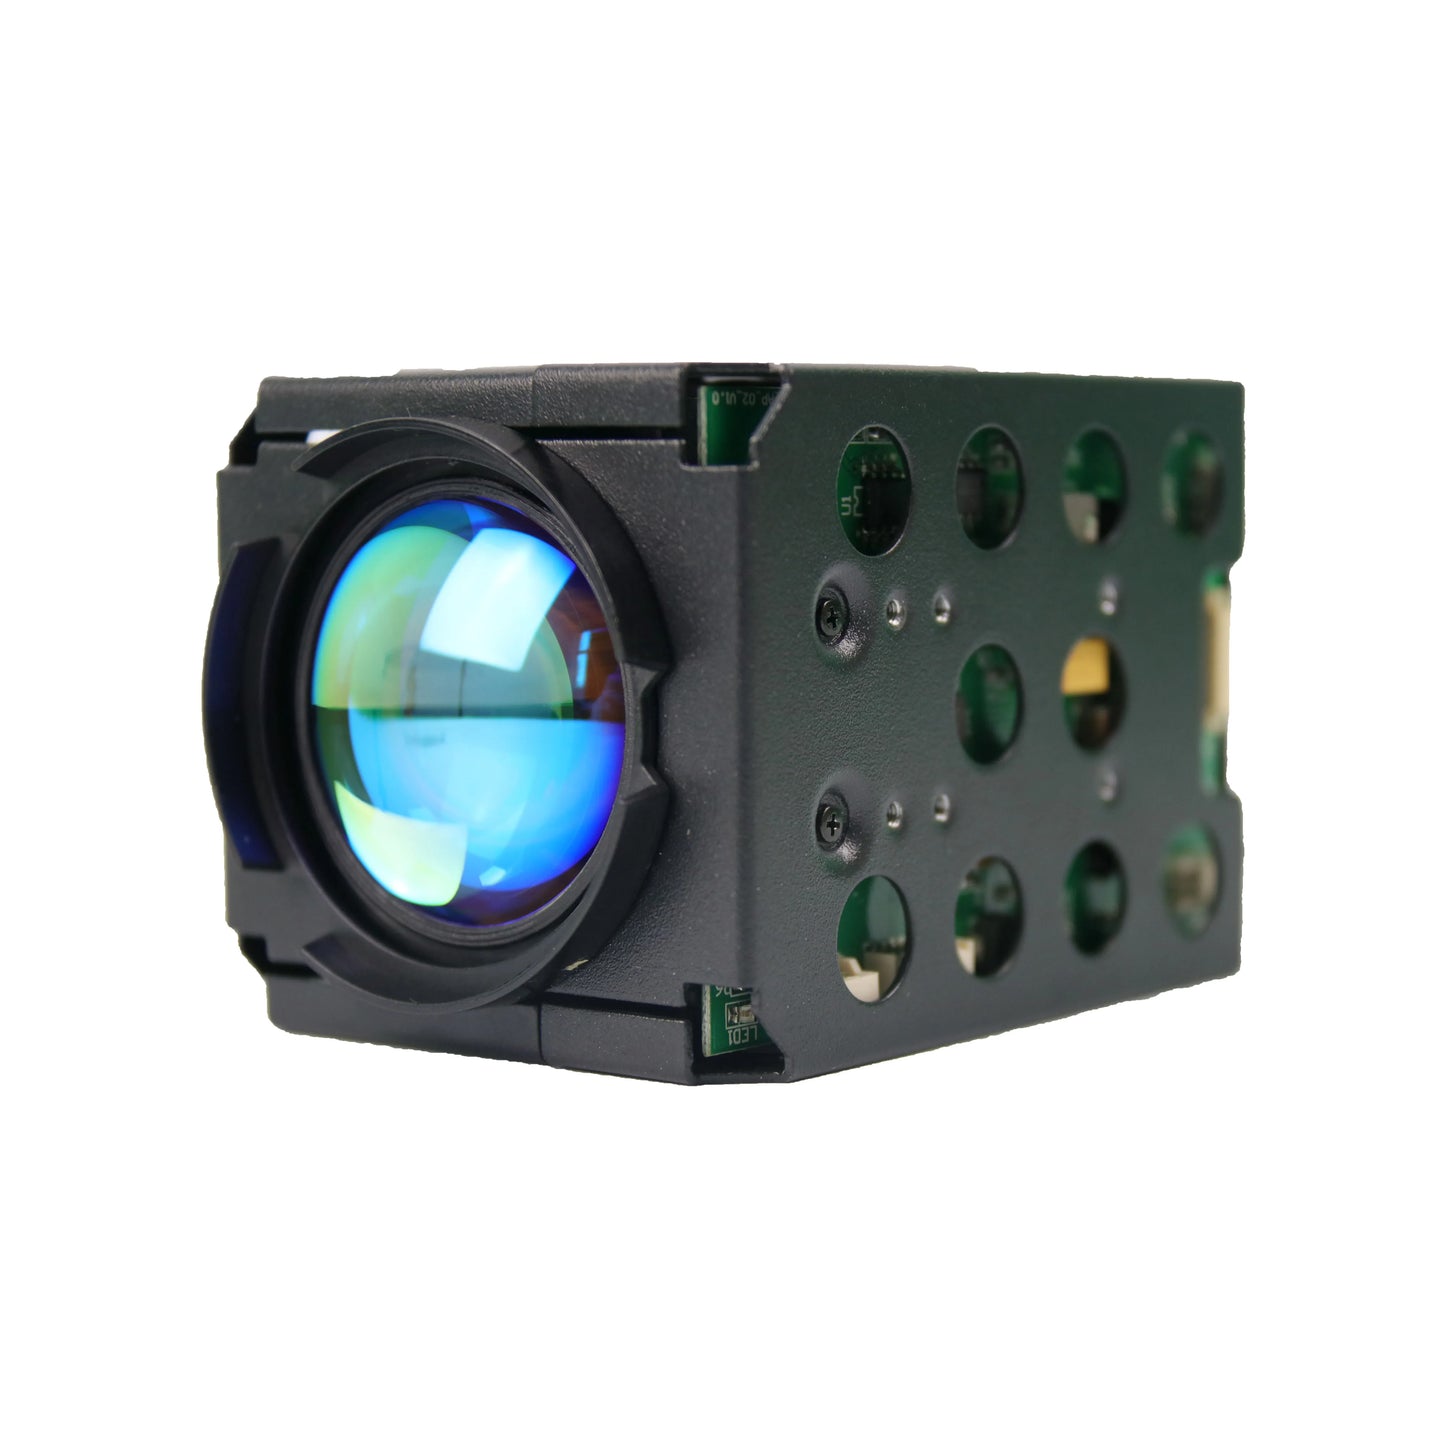 Certificated 500 Meters Long Range 850nm IR Wavelength Infrared Laser Illuminator Light Module Thermal Camera